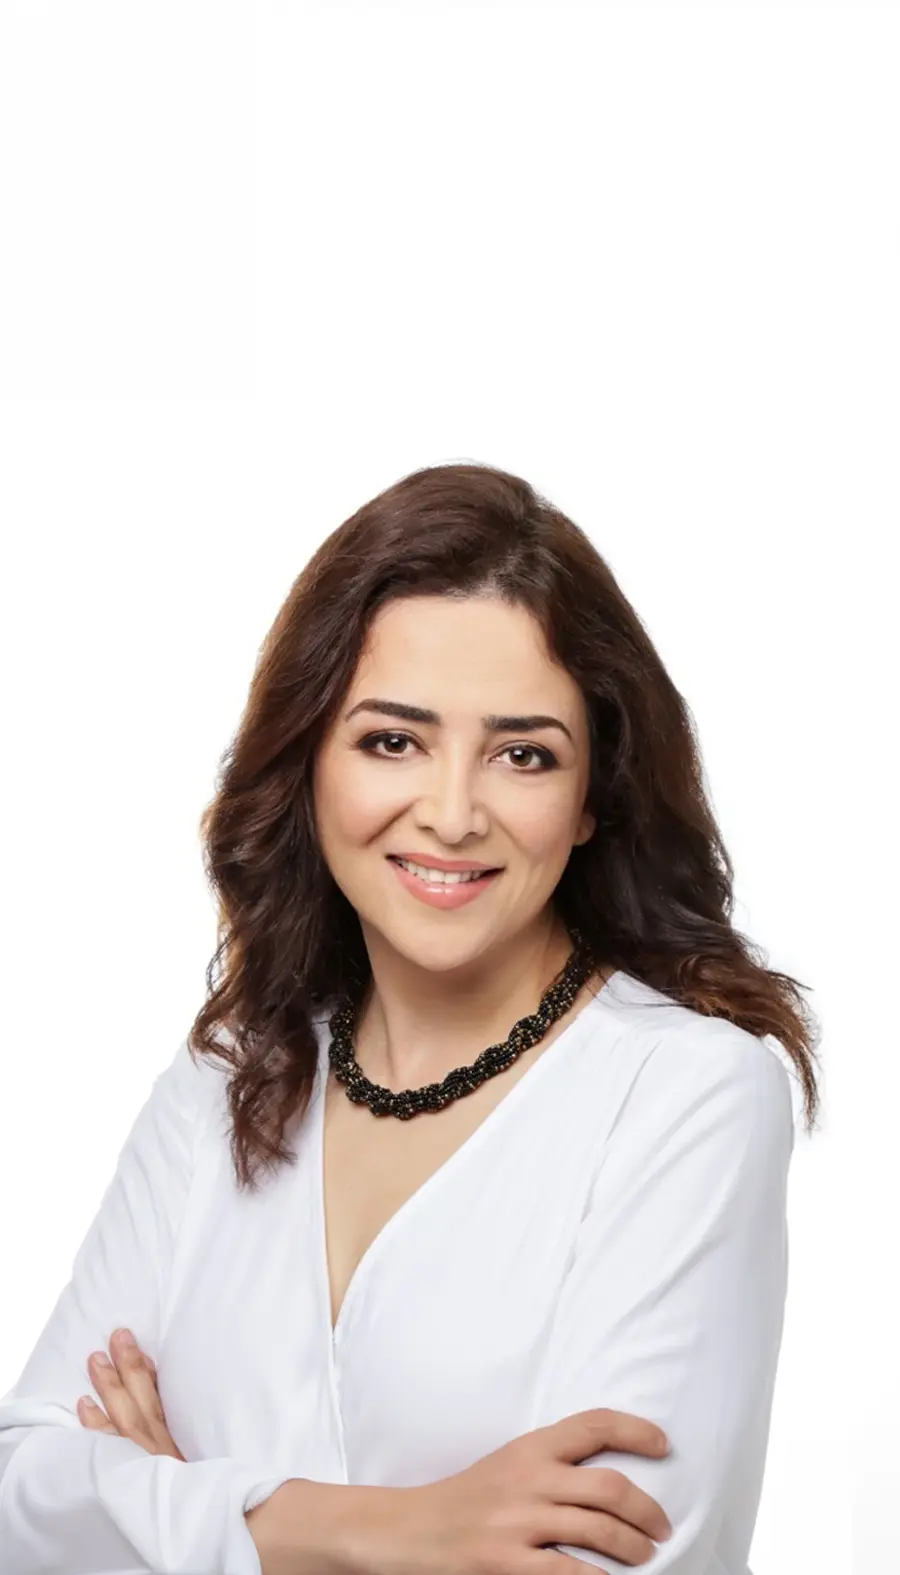 Dr. Maria Rashidi, Head of Industry Engagement and Partnership